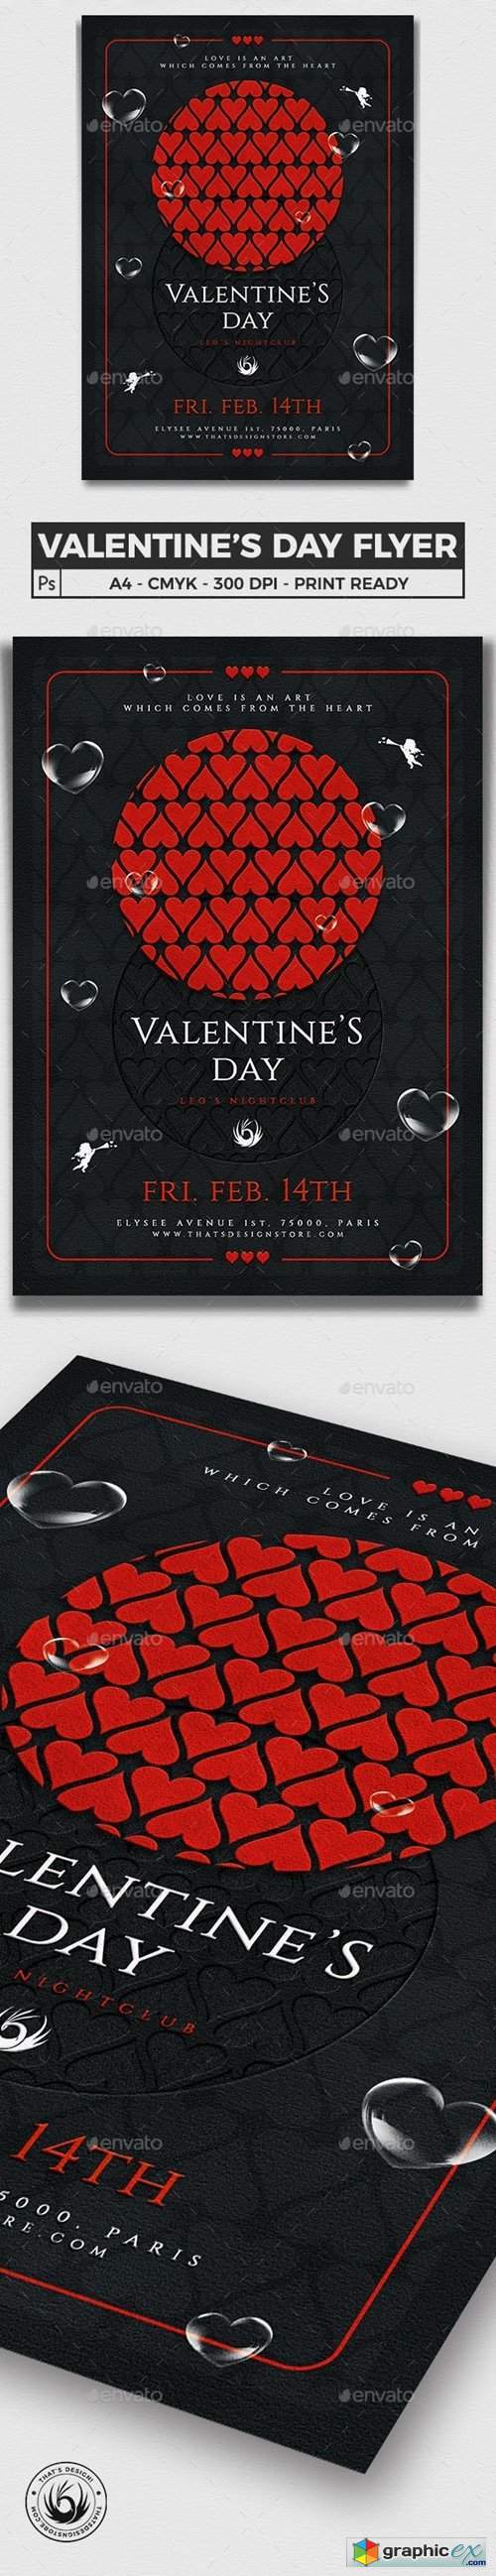 Valentines Day Flyer Template V22